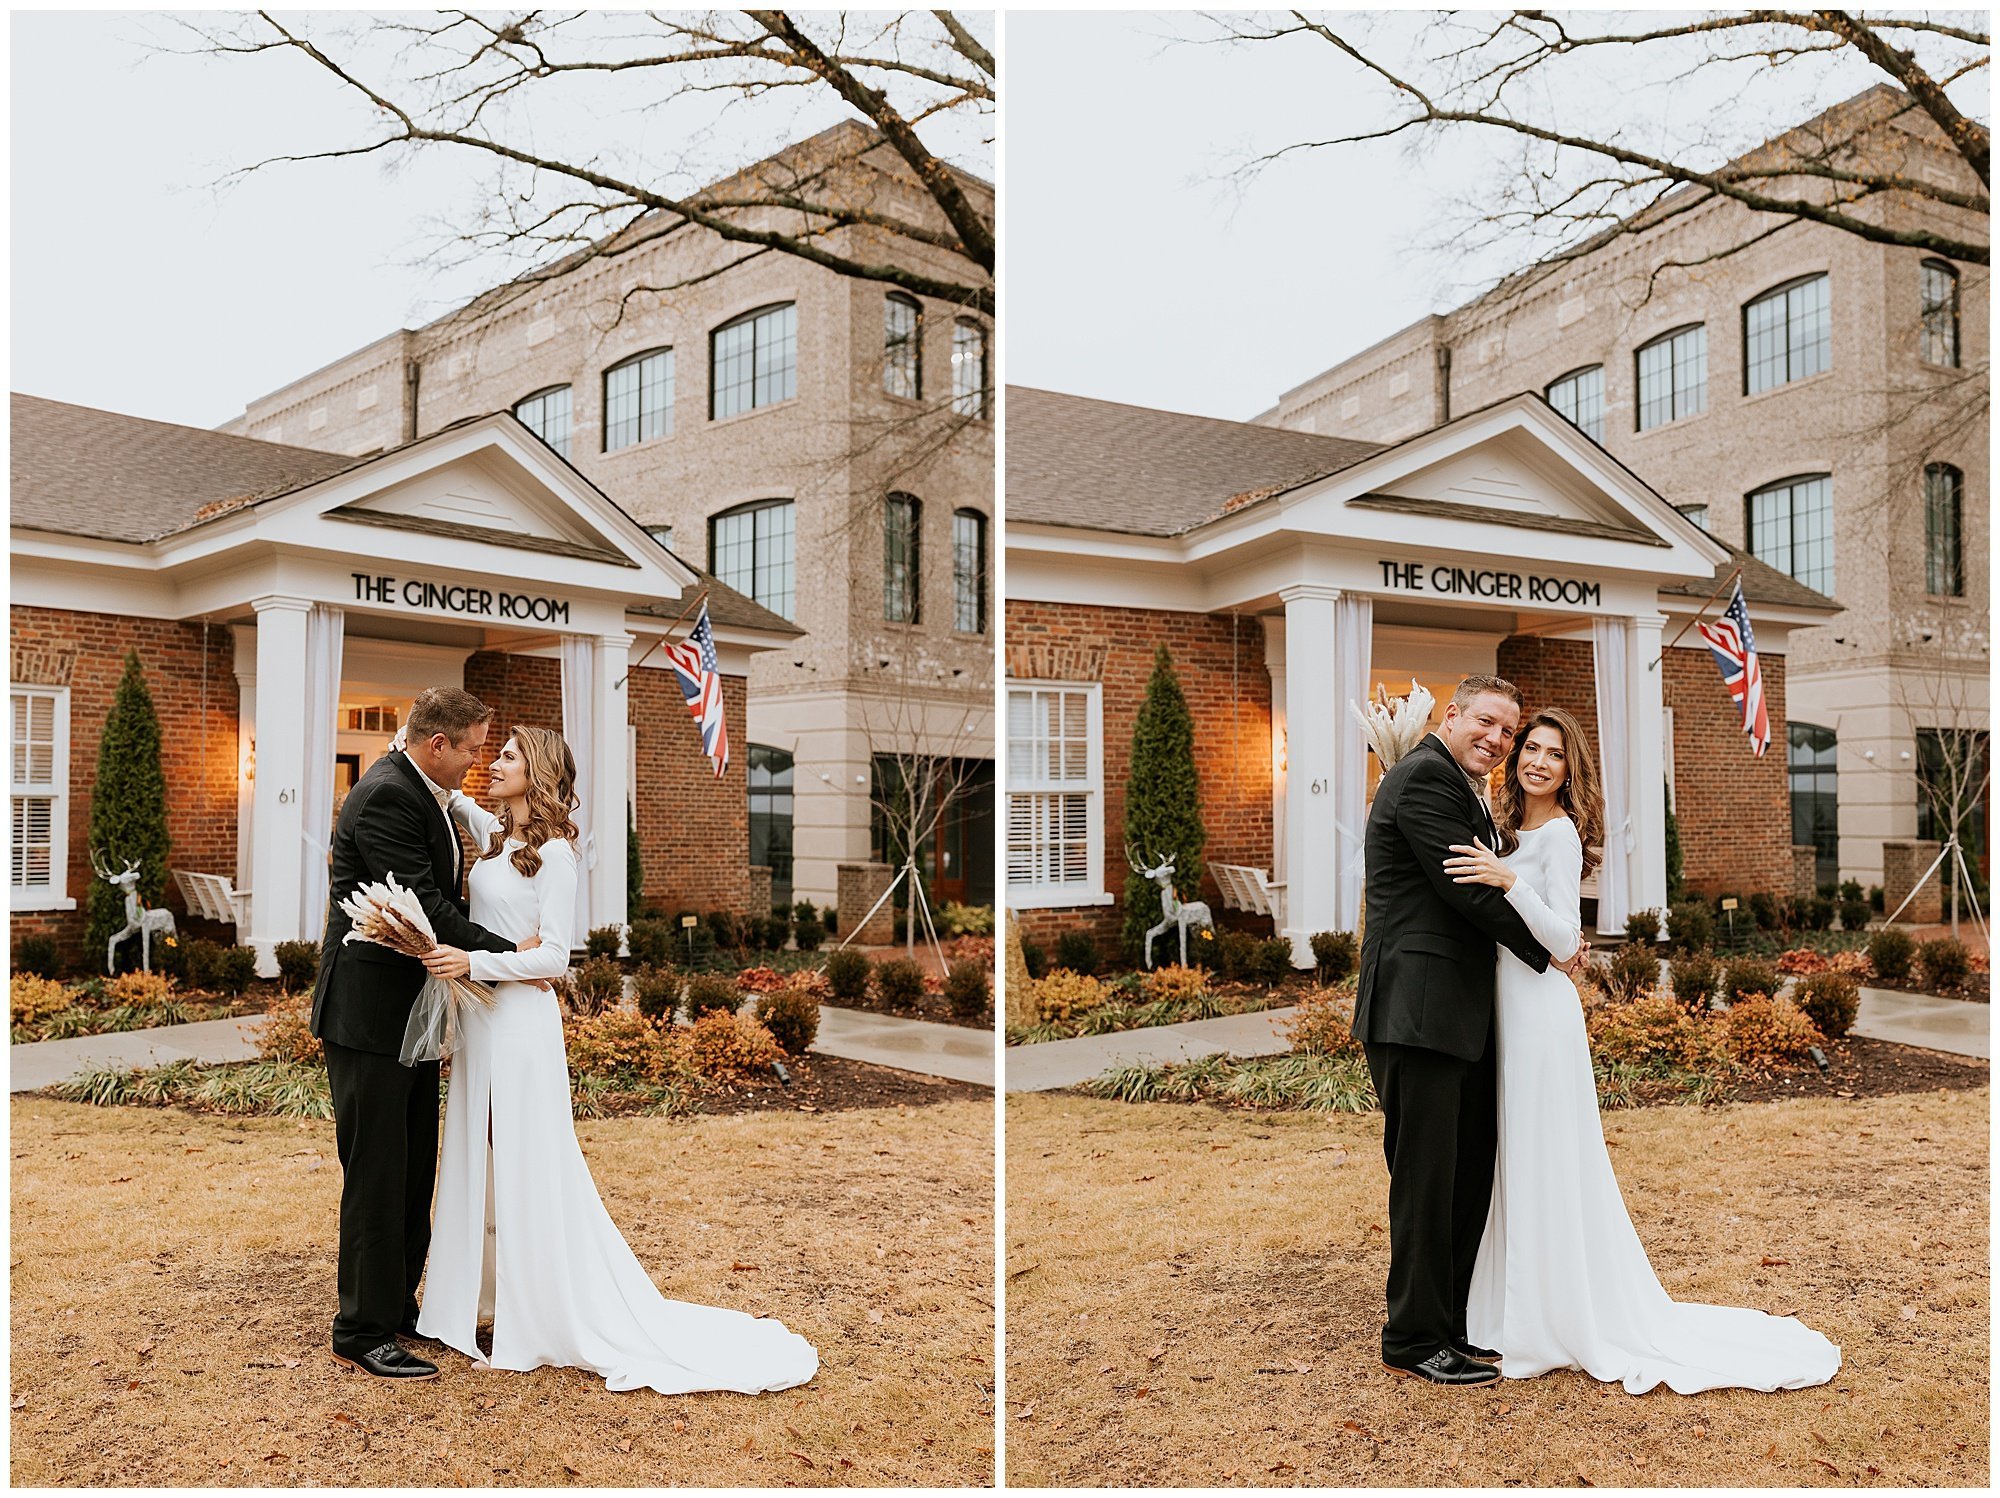 The Ginger room, Vow renewal, Vow renewal with family, Alpharetta, Alpharetta Photographer,  Atlanta Wedding/ Engagement Photographer 